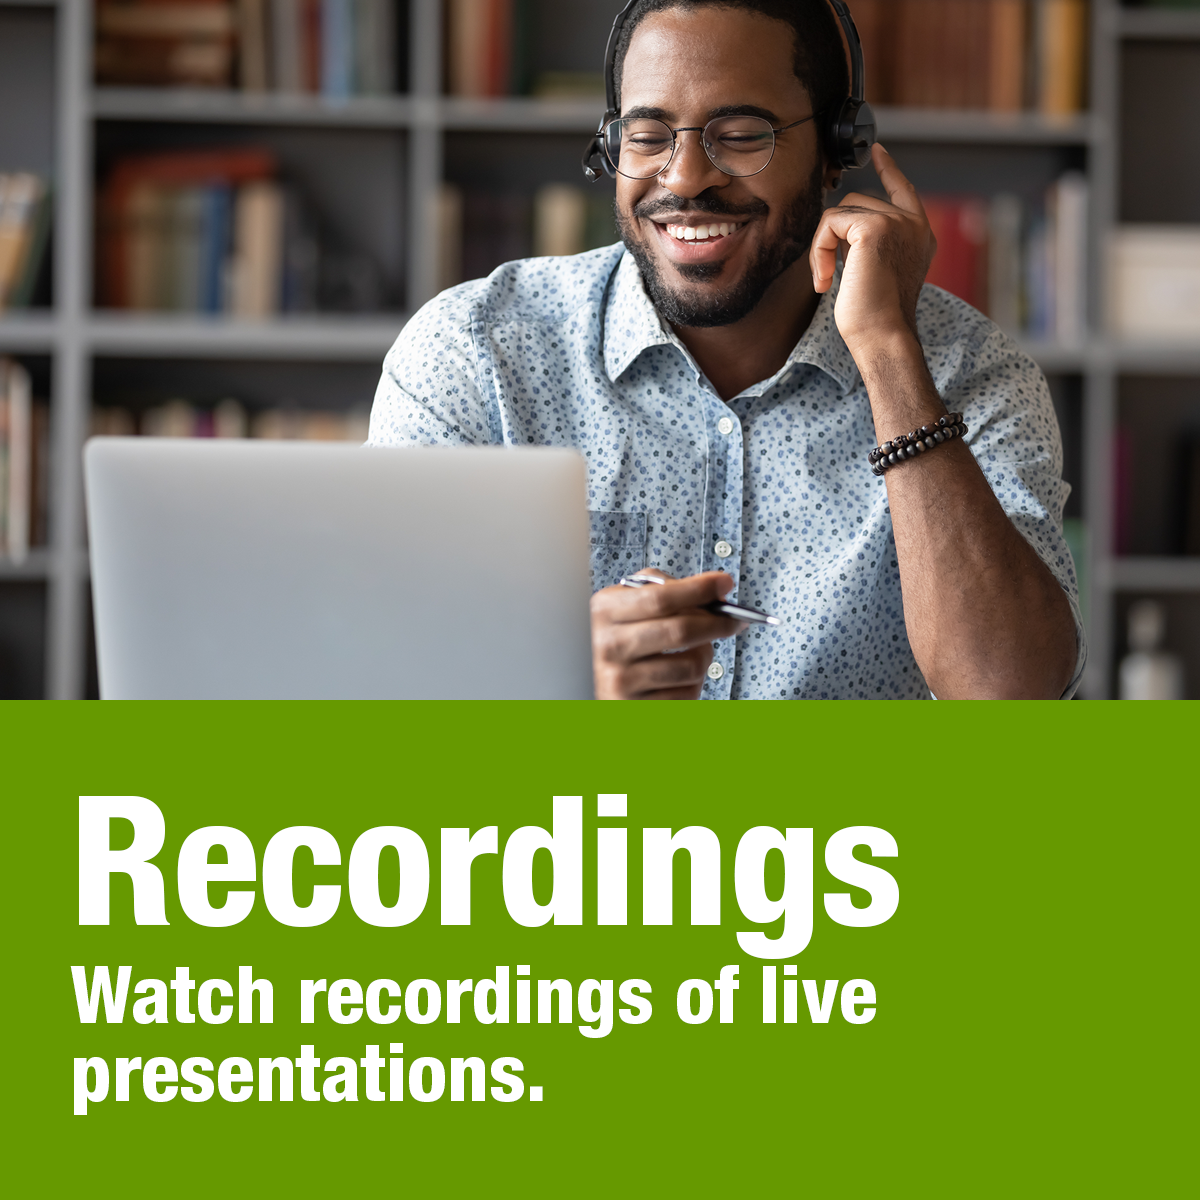 Watch recordings